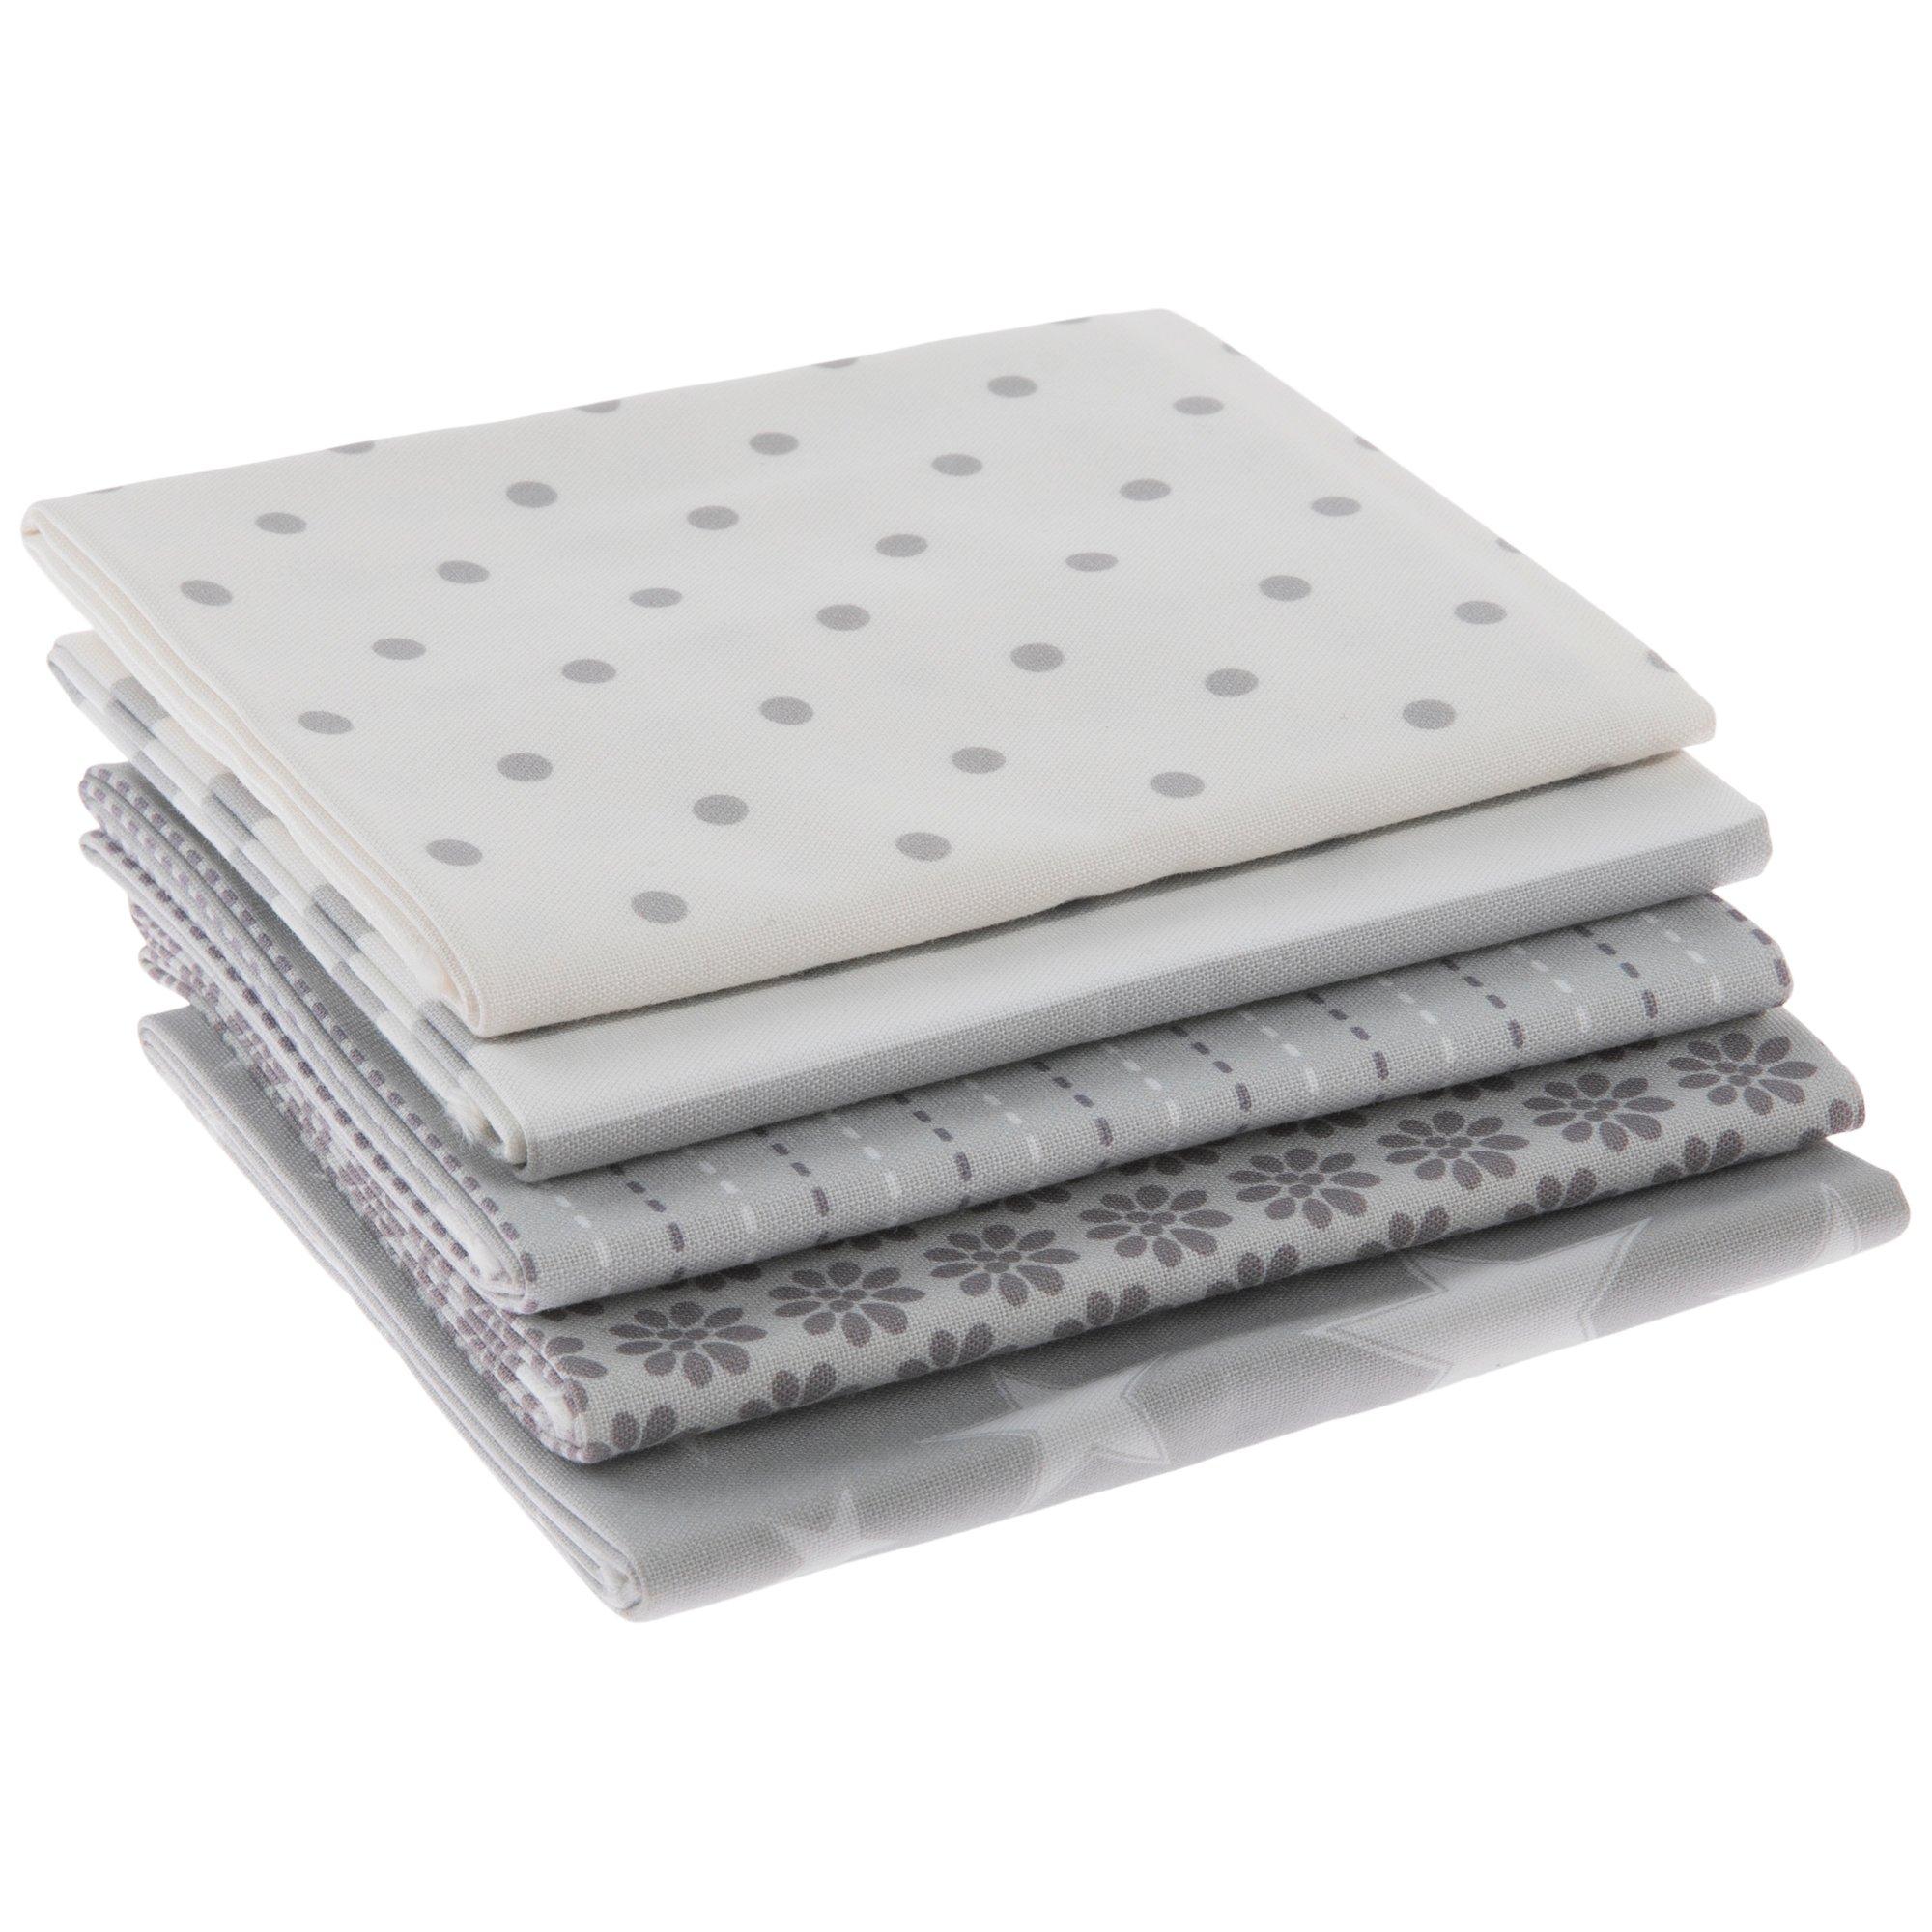 CJINZHI Fat Quarters 織物束,14 件 19.69 x 19.69 英吋(50 x 50  公分)棉質織物絎縫方形大量預切拼布四分之一床單,適用於縫紉圖案捆,紅色、灰色、藍色花卉